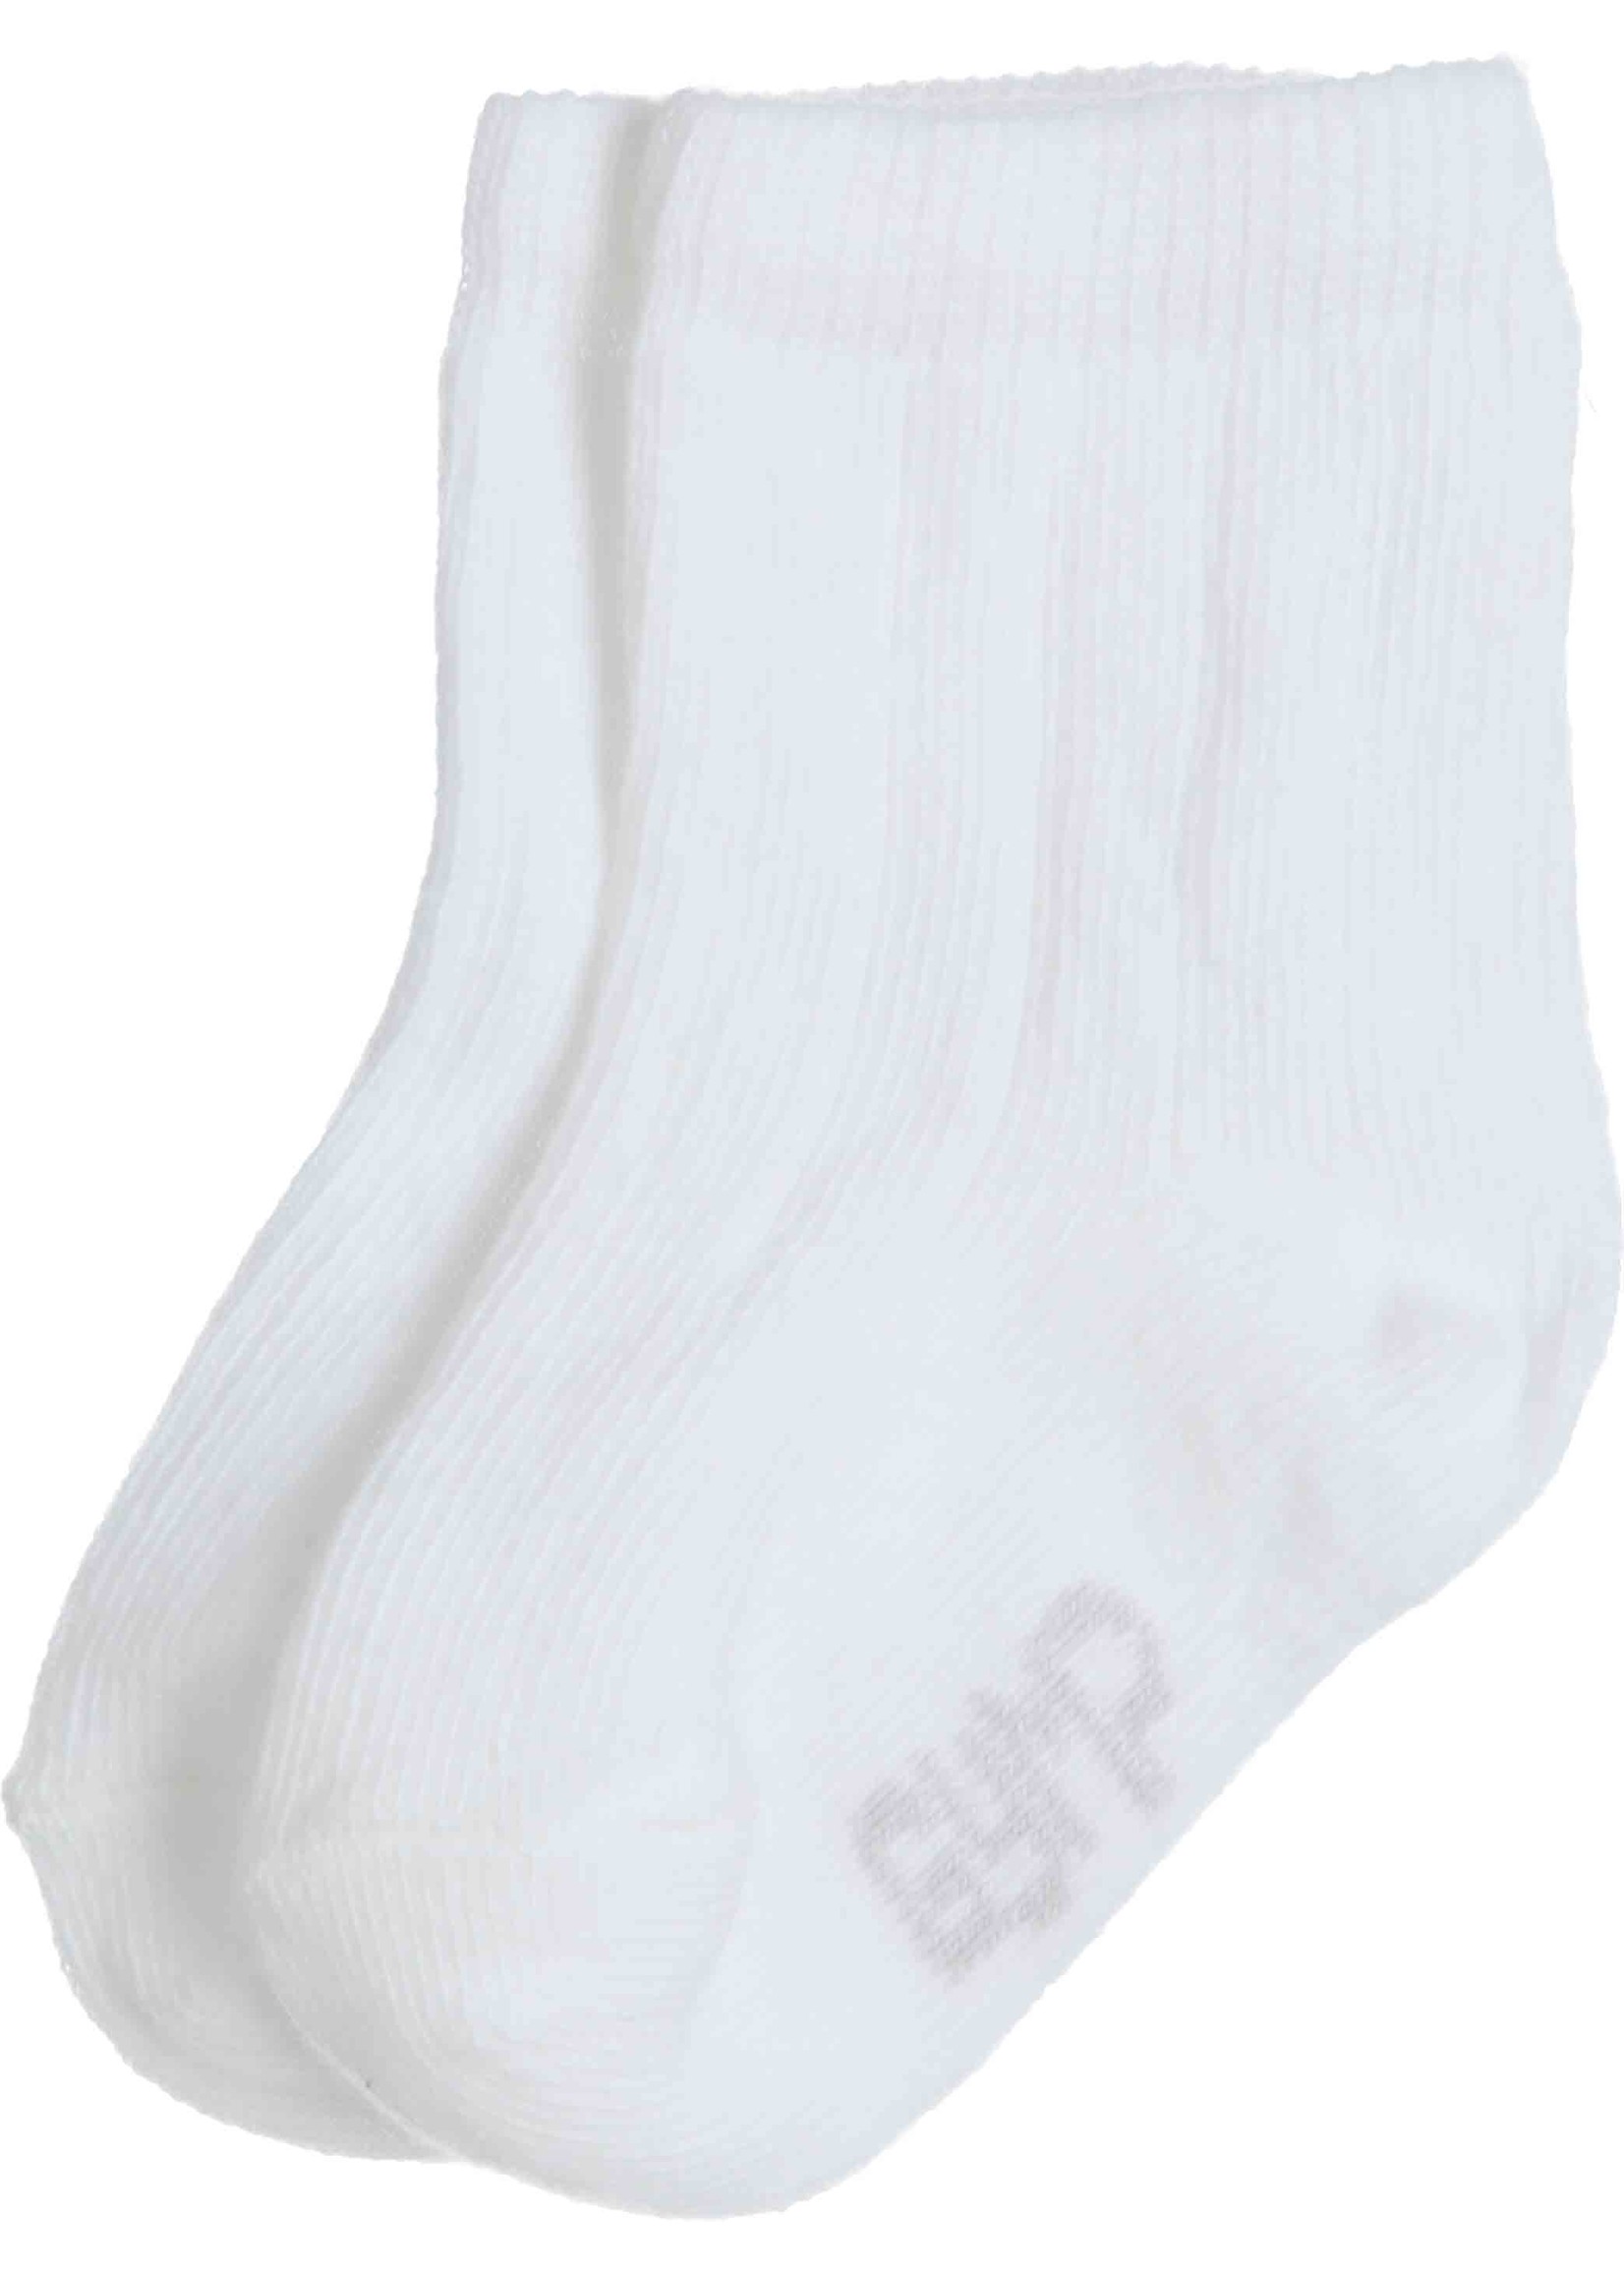 Gymp Socks Kite White - White 05-3364-20